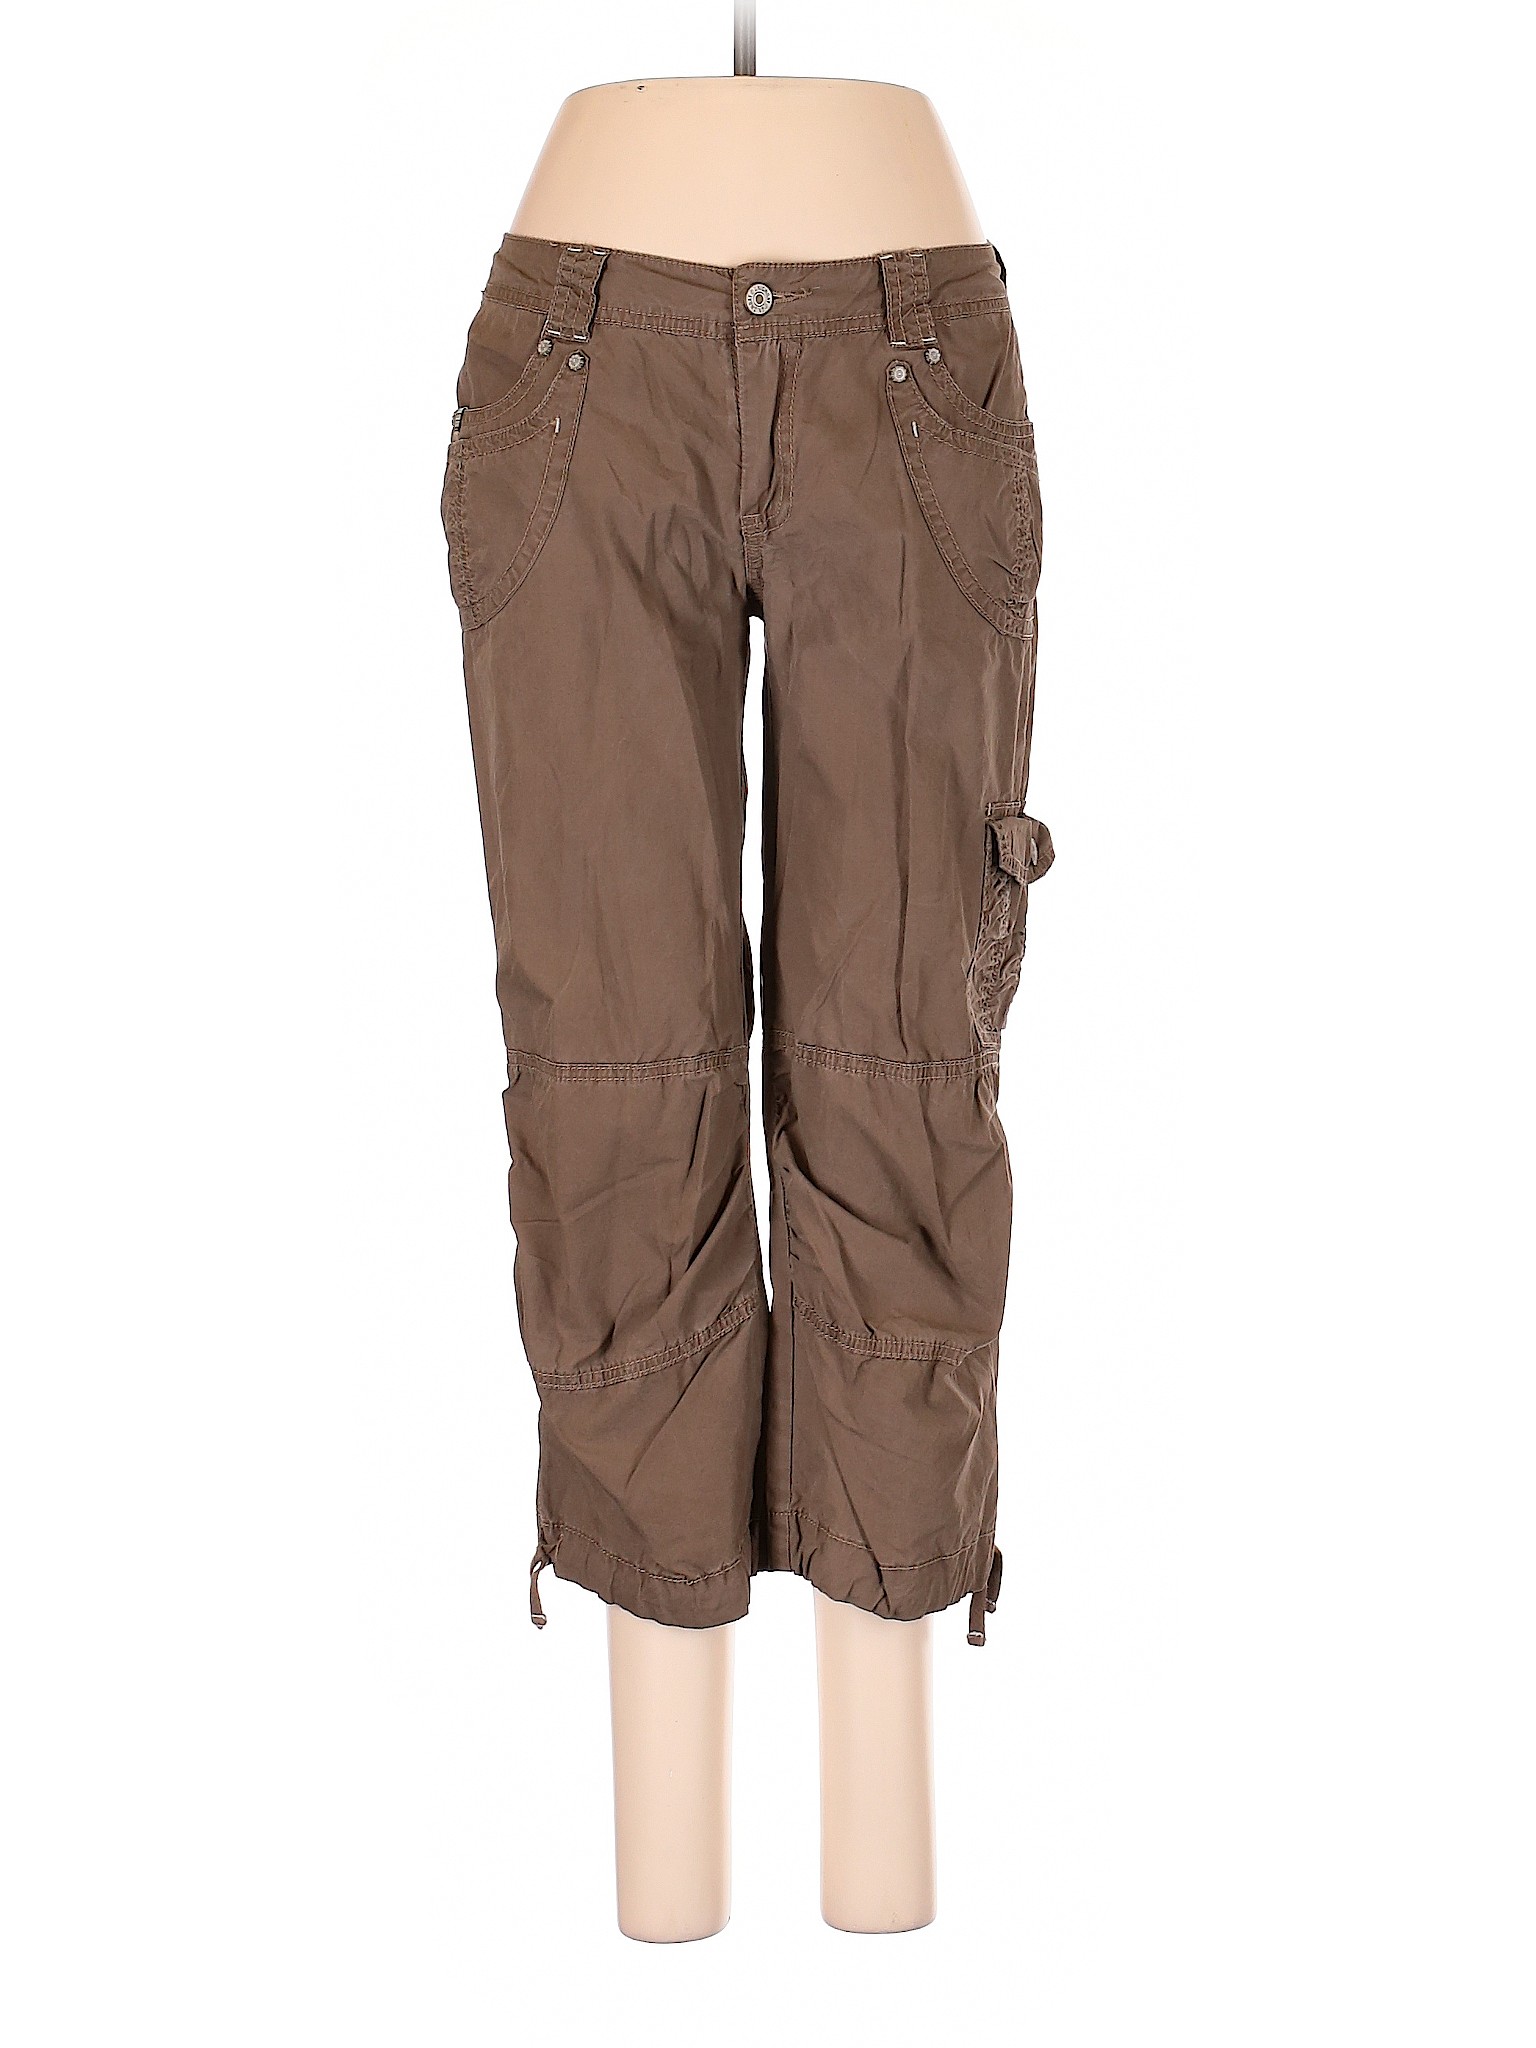 unionbay womens cargo pants